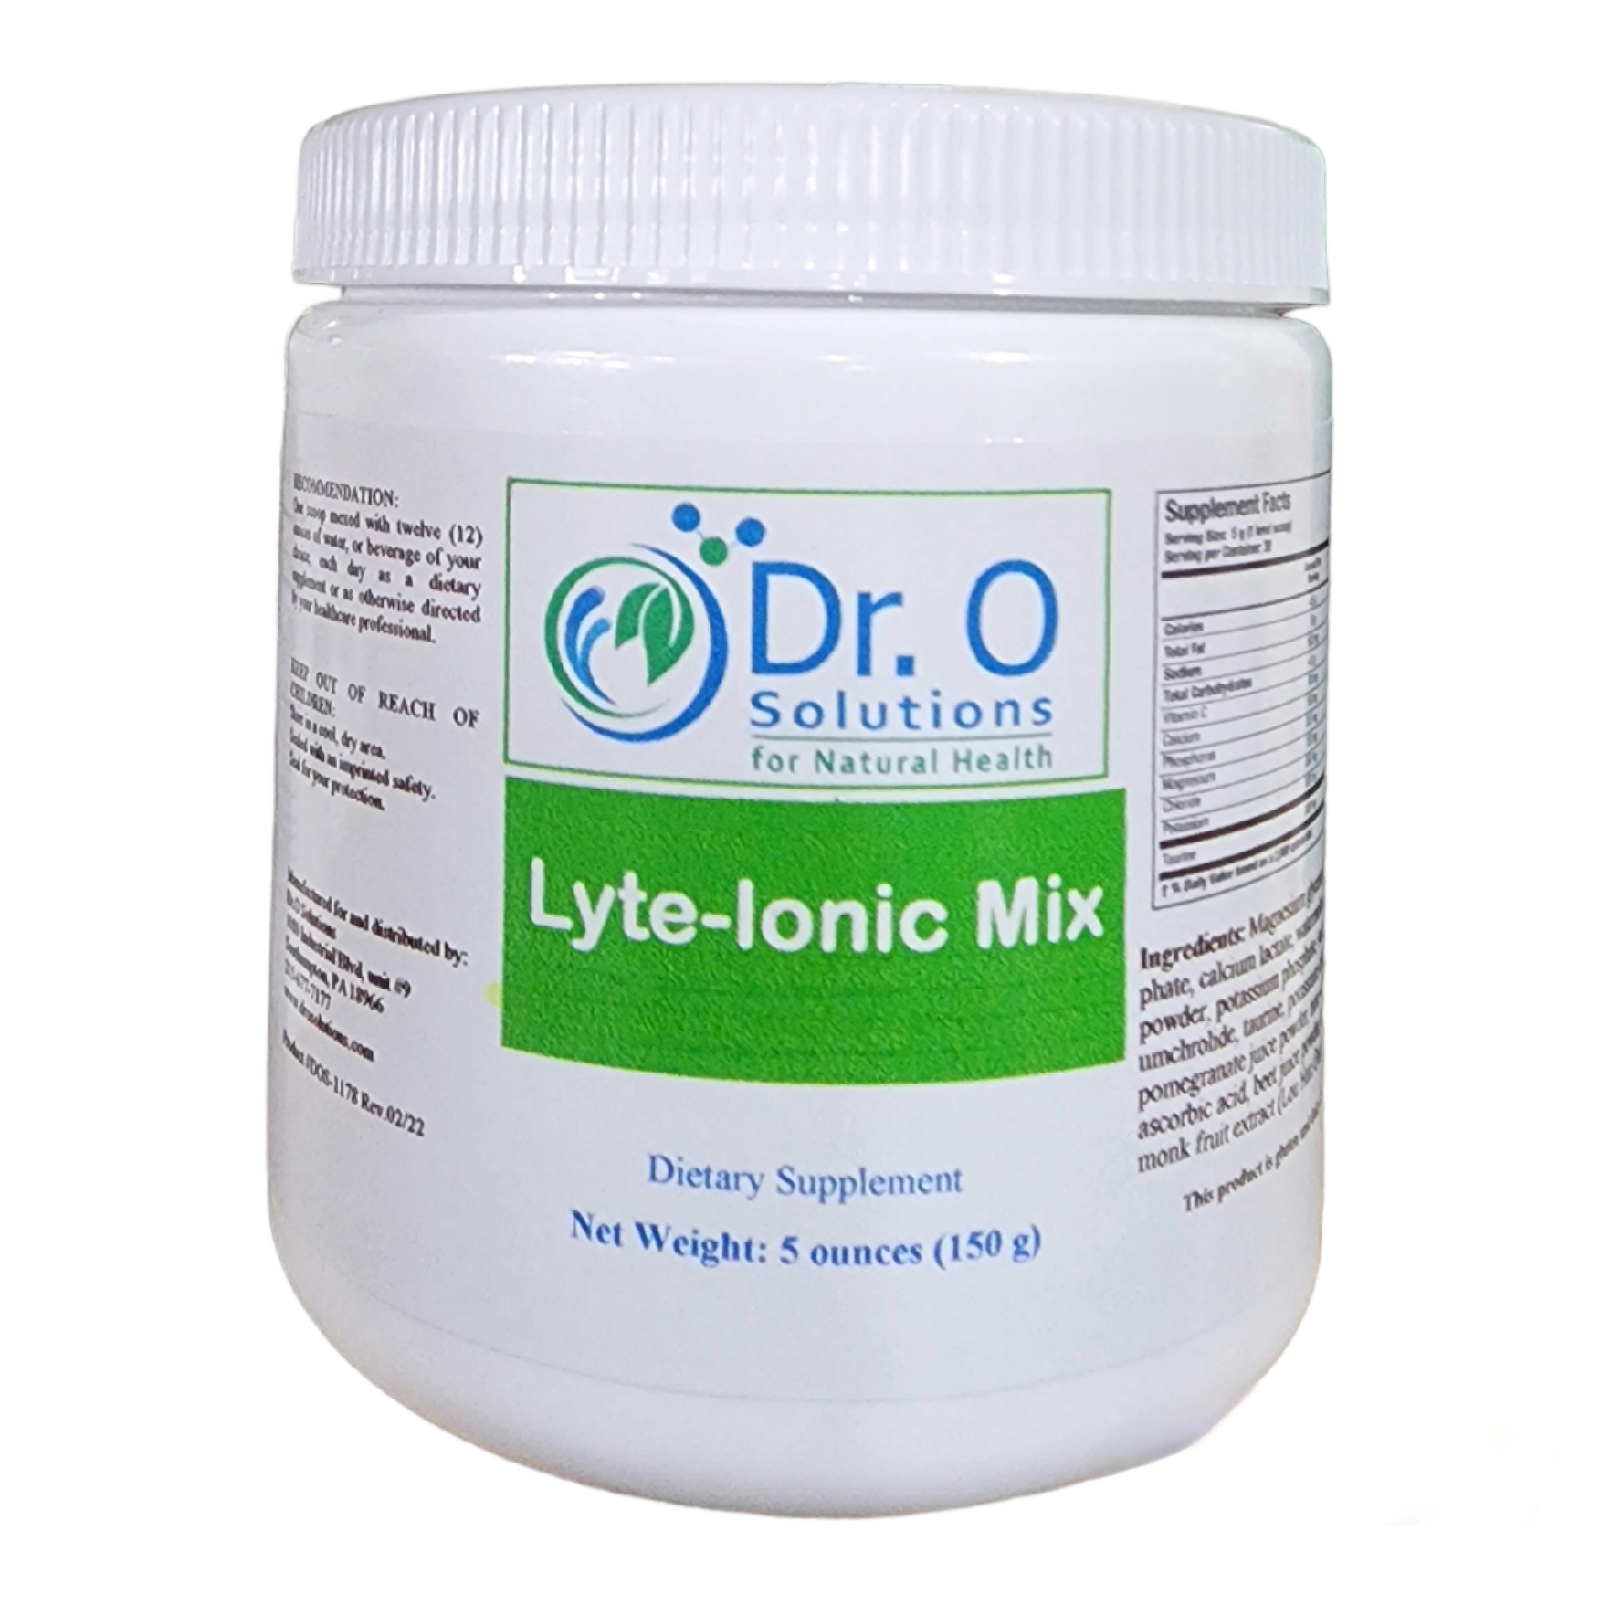 Lyte-Ionic Mix